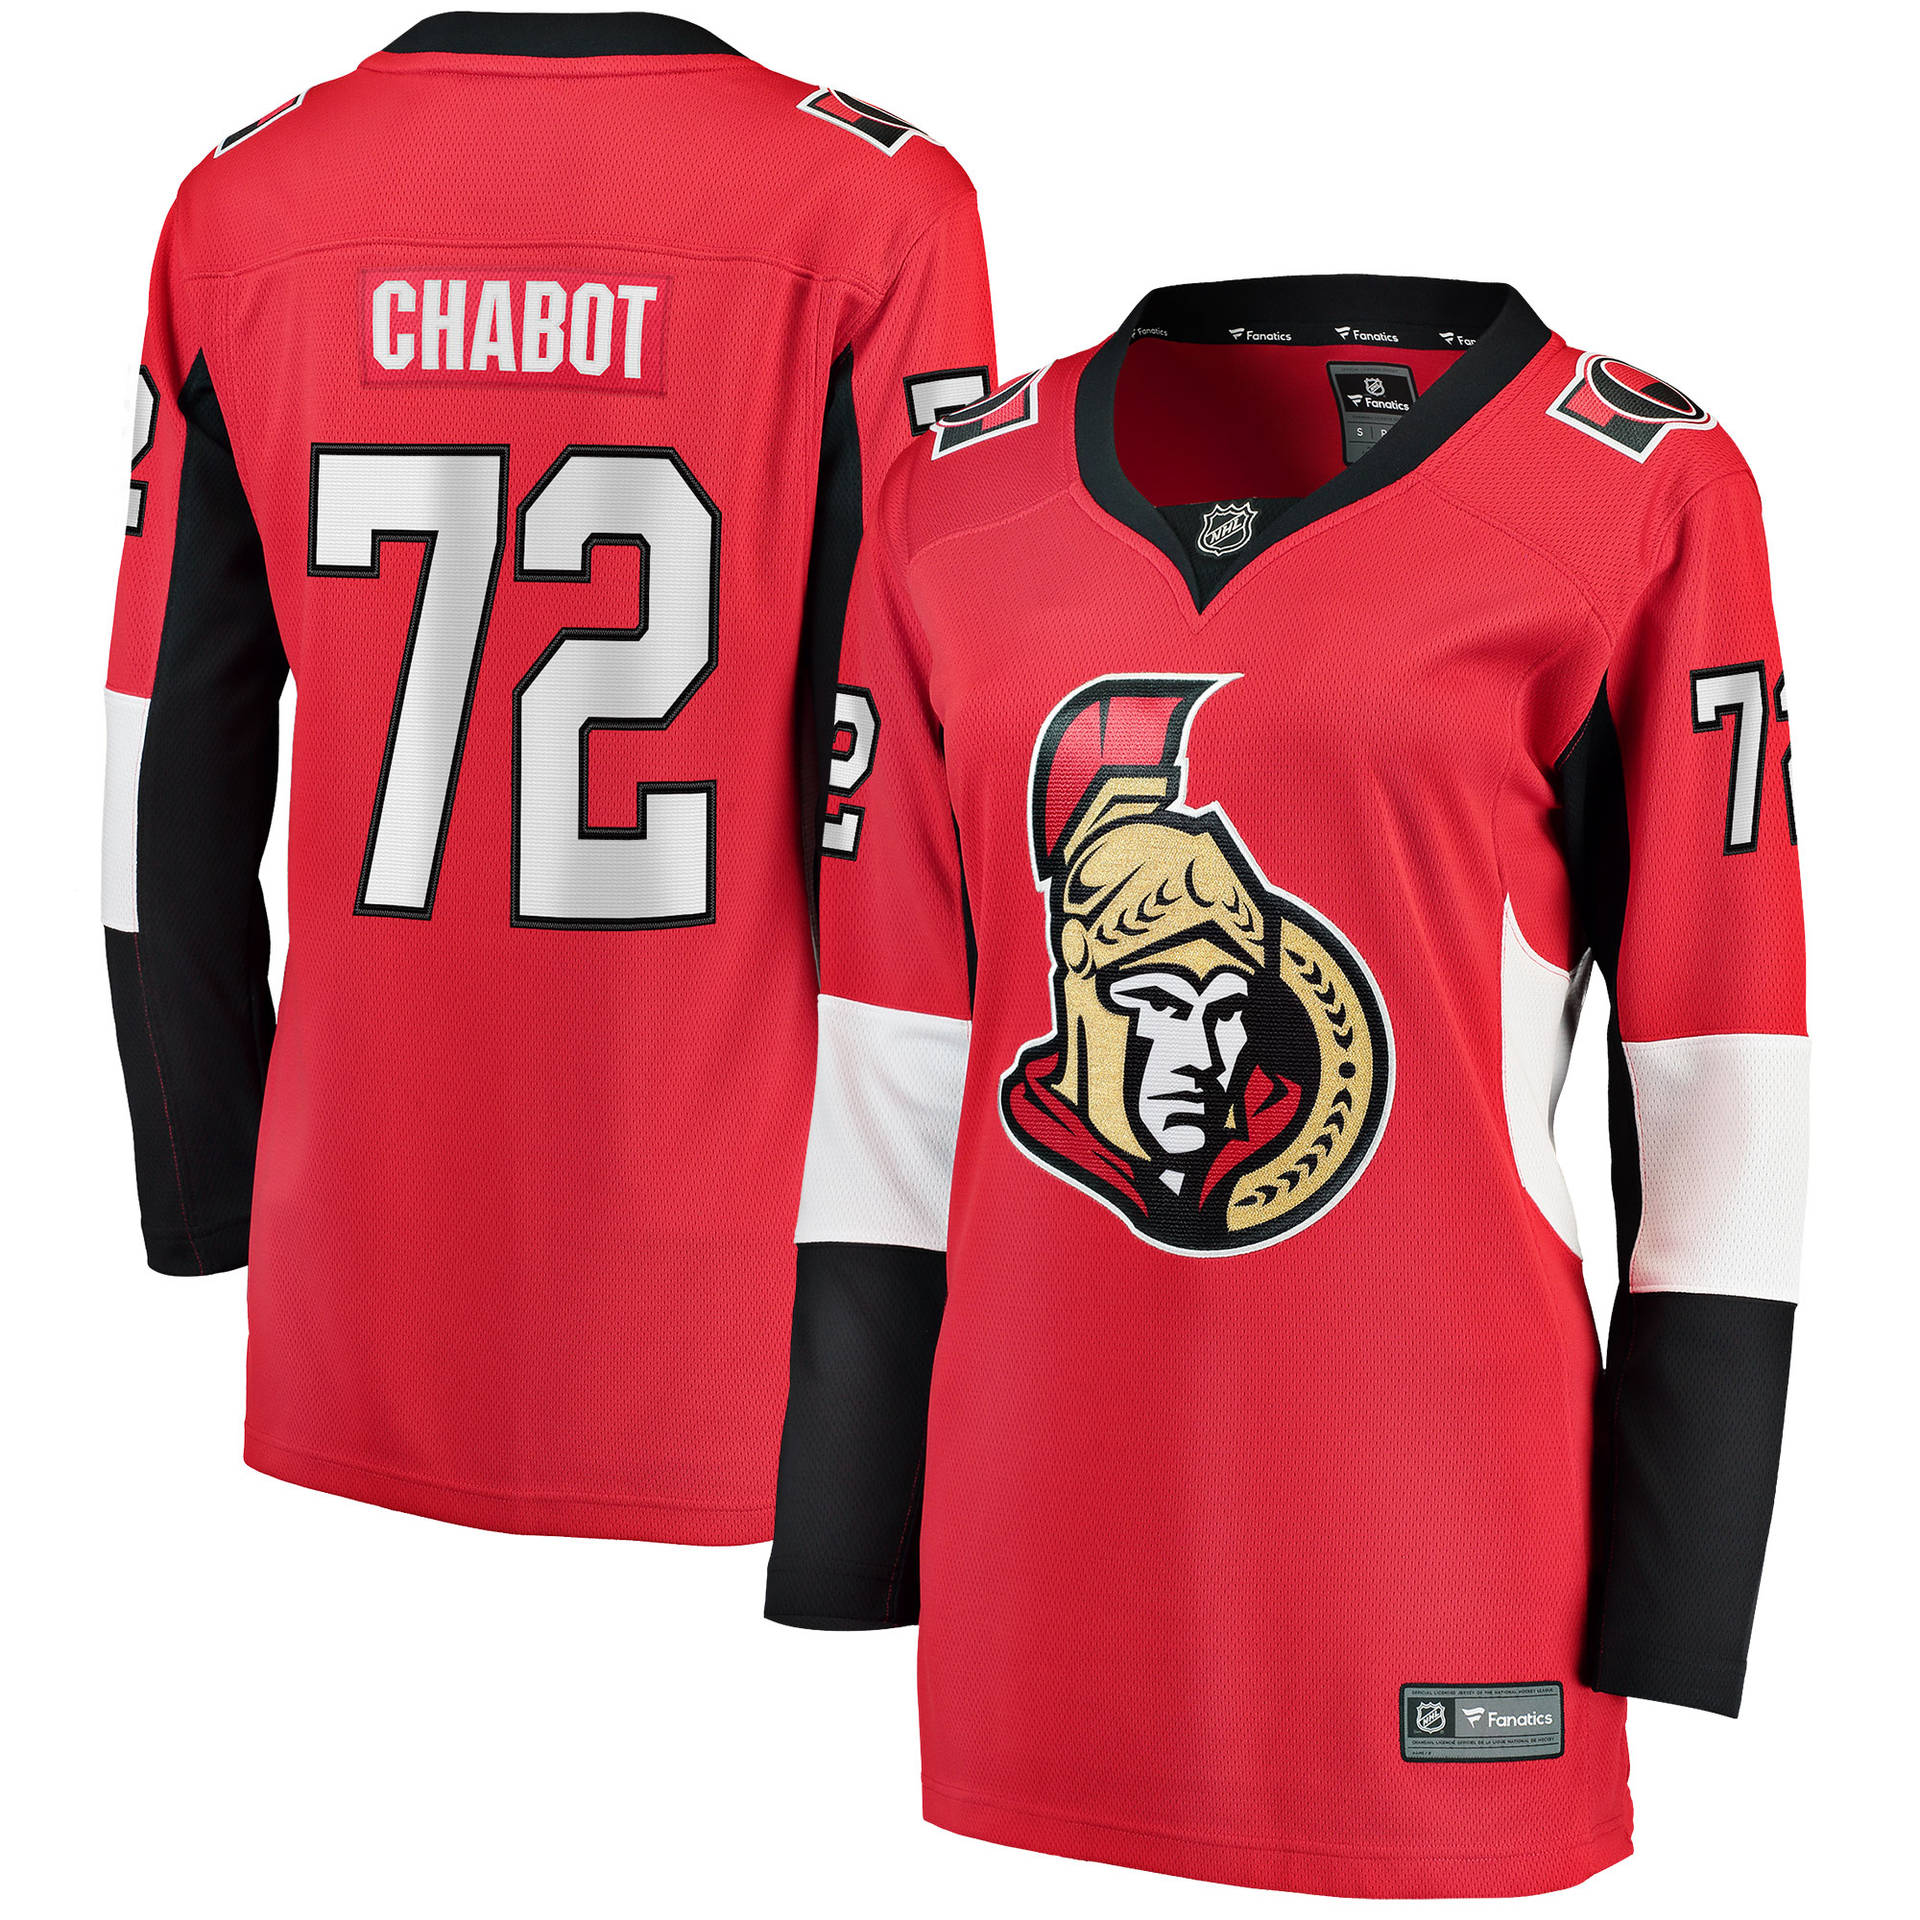 Ottawa Senators Home Jersey, #72 Chabot – Belleville Senators